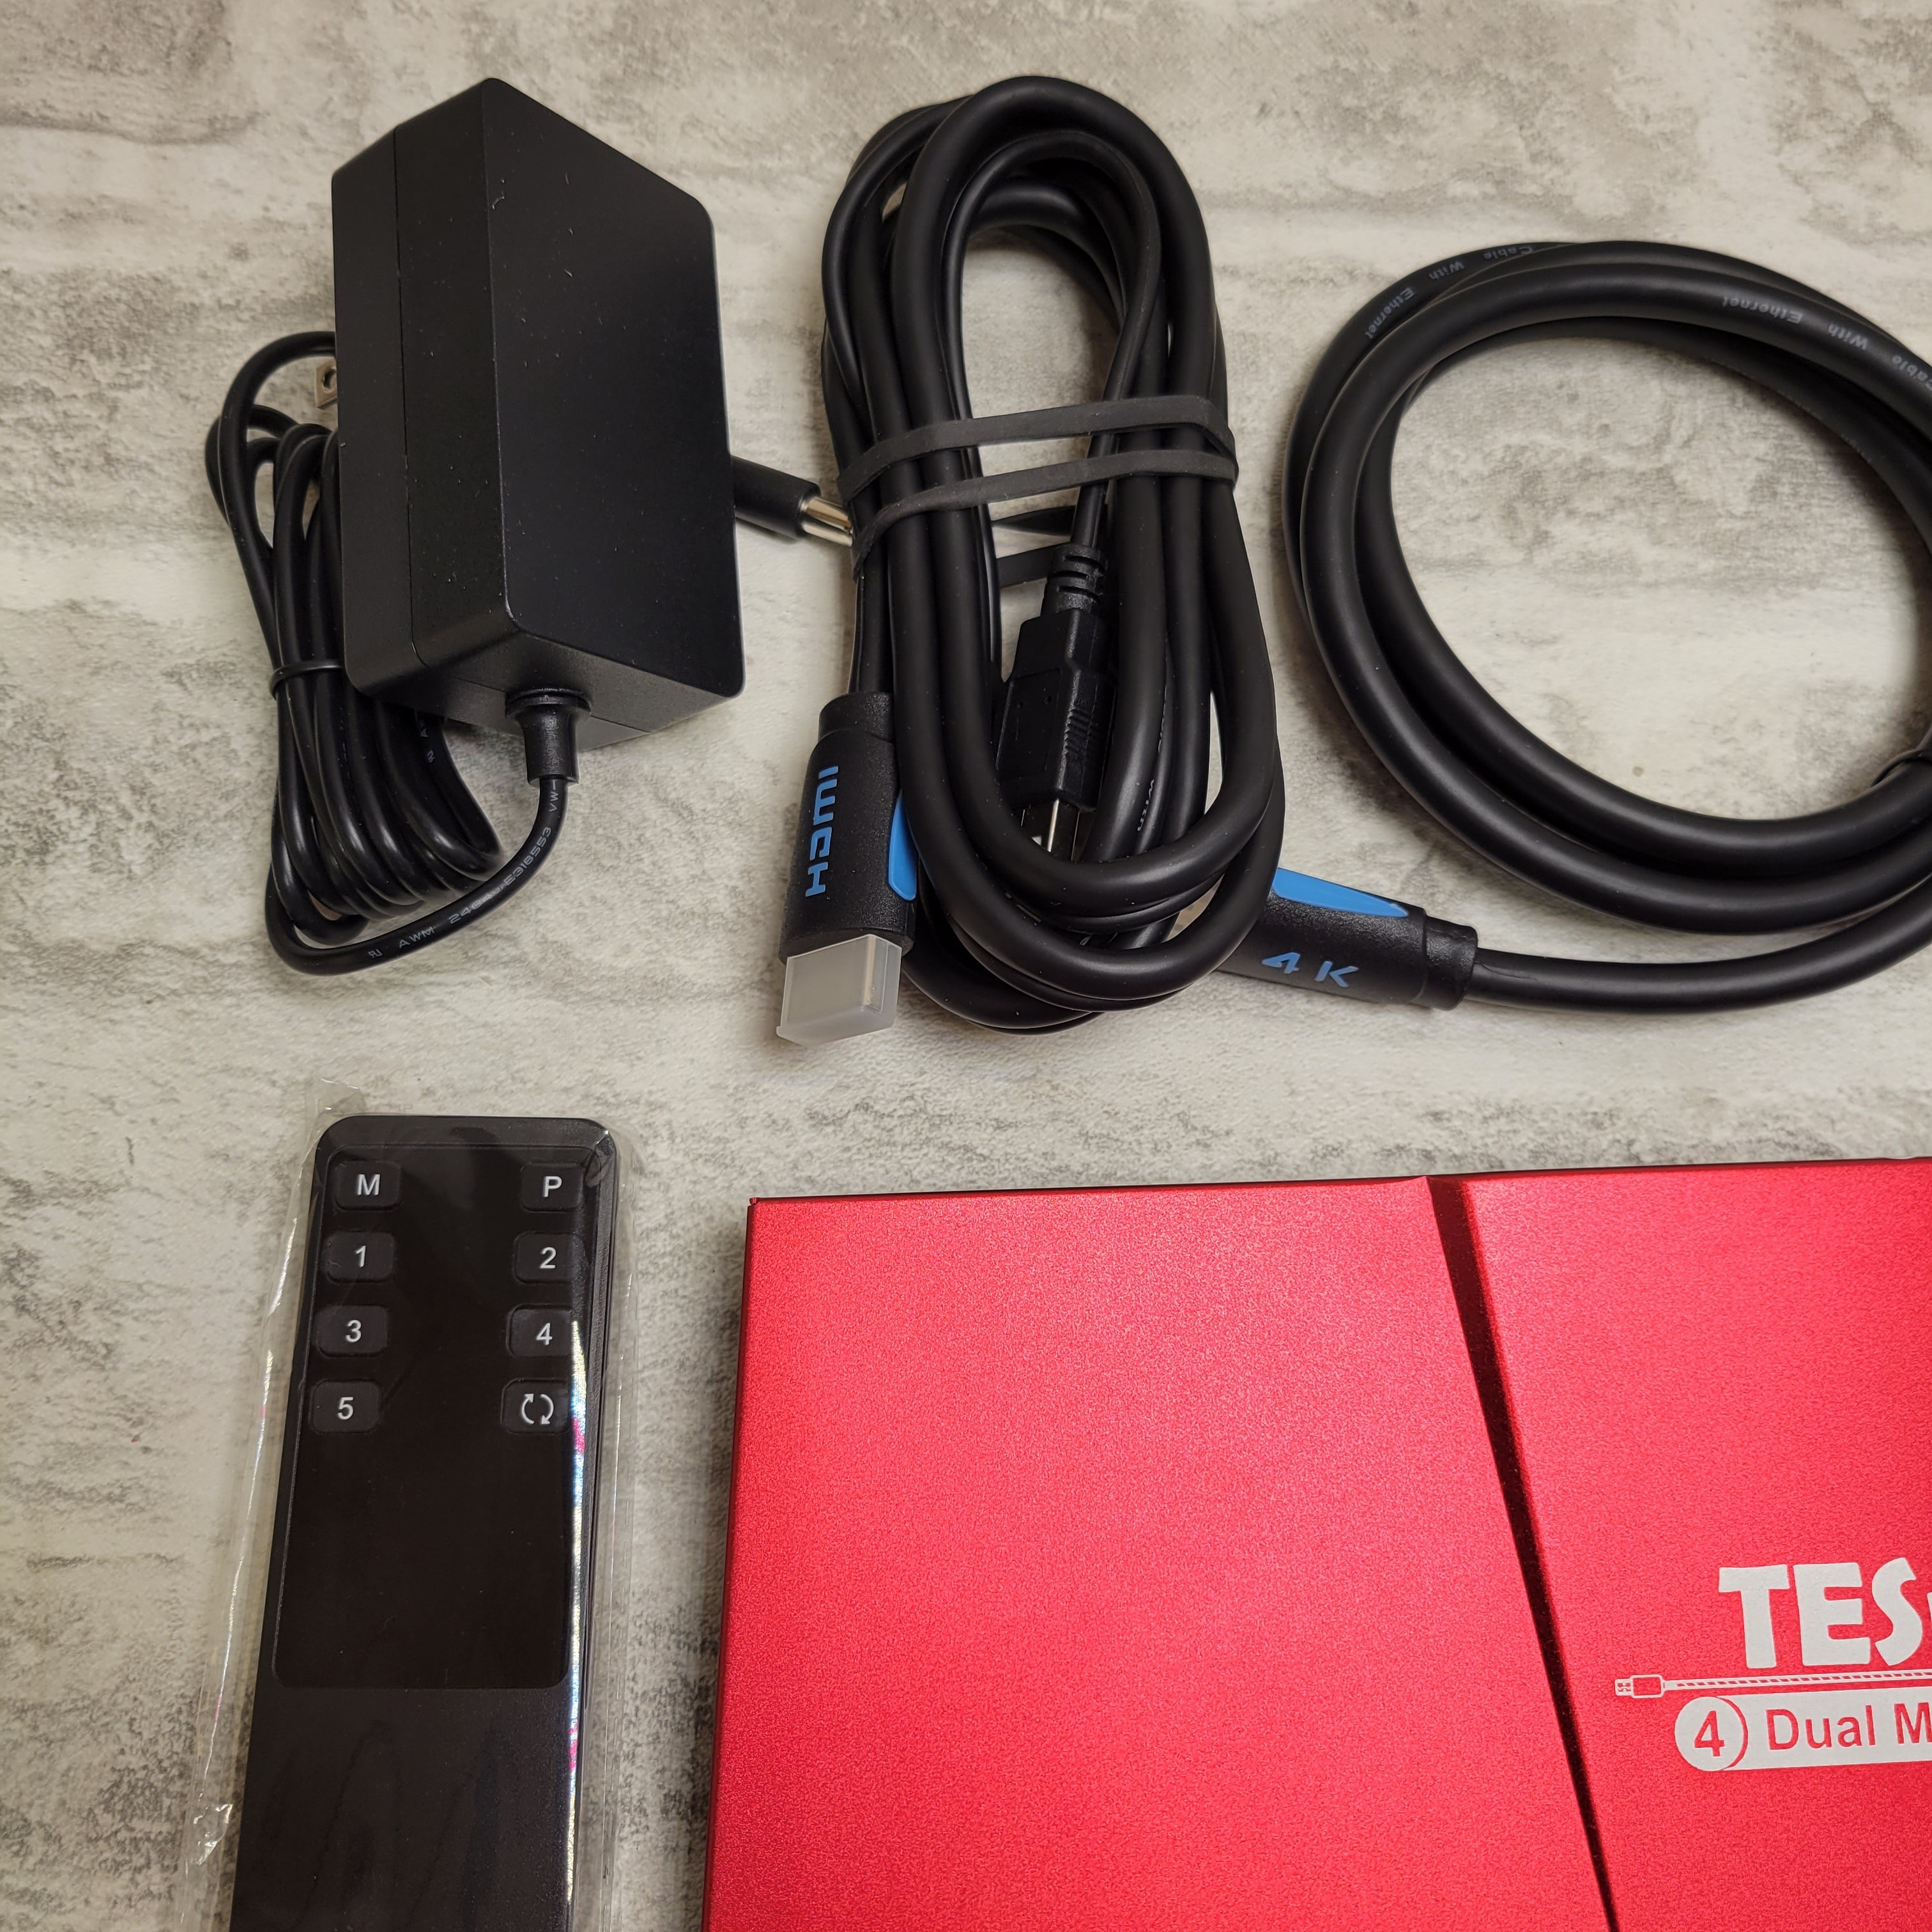 TESmart Dual HDMI 4x2 Dual Monitor KVM Switch 2 Port Updated 4K @ 60Hz,(Red) (7670606889198)